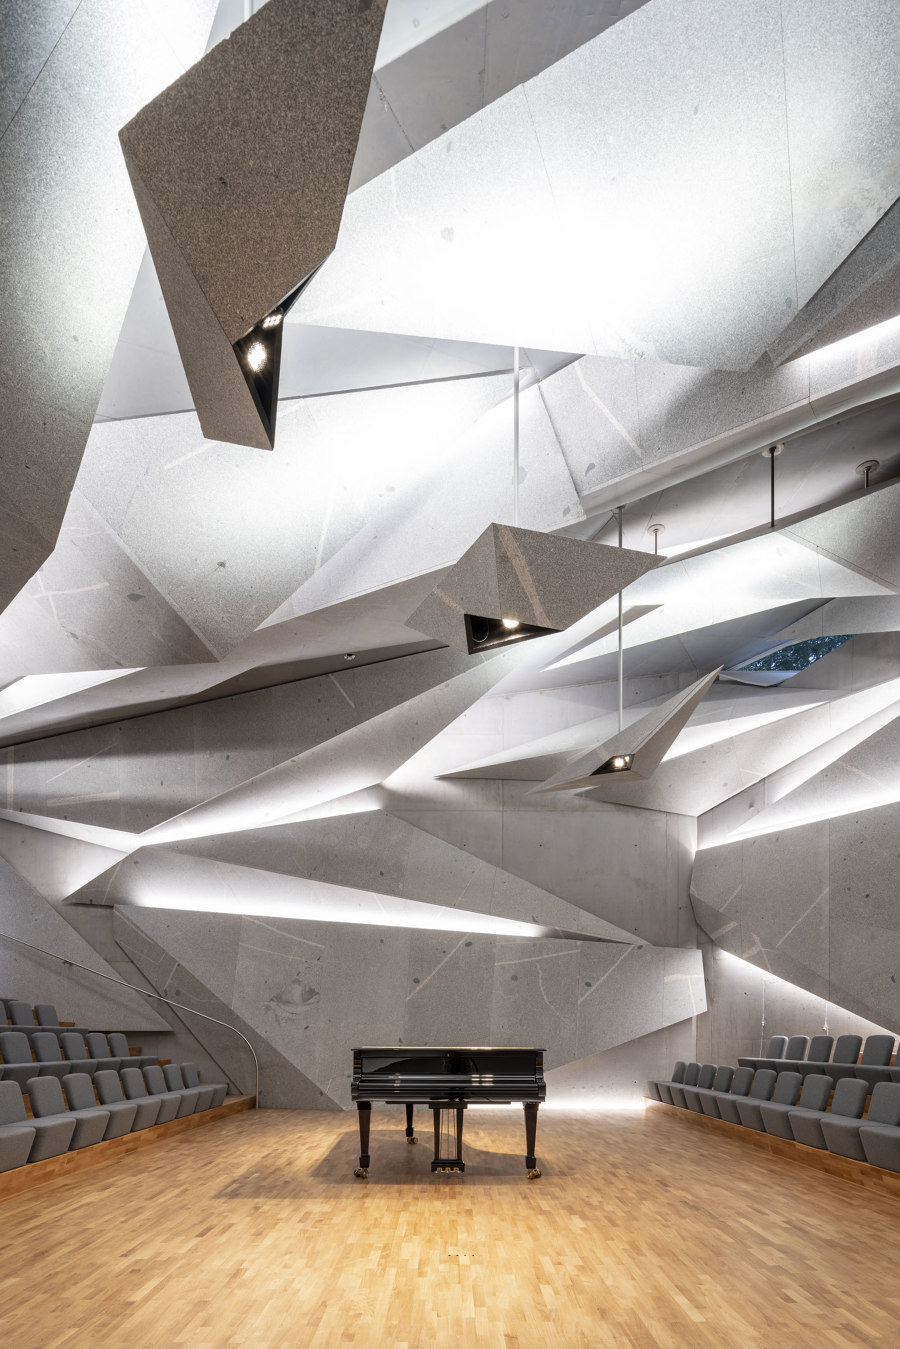 Villa Marteau Concert Hall by peter haimerl . architektur | Concert halls